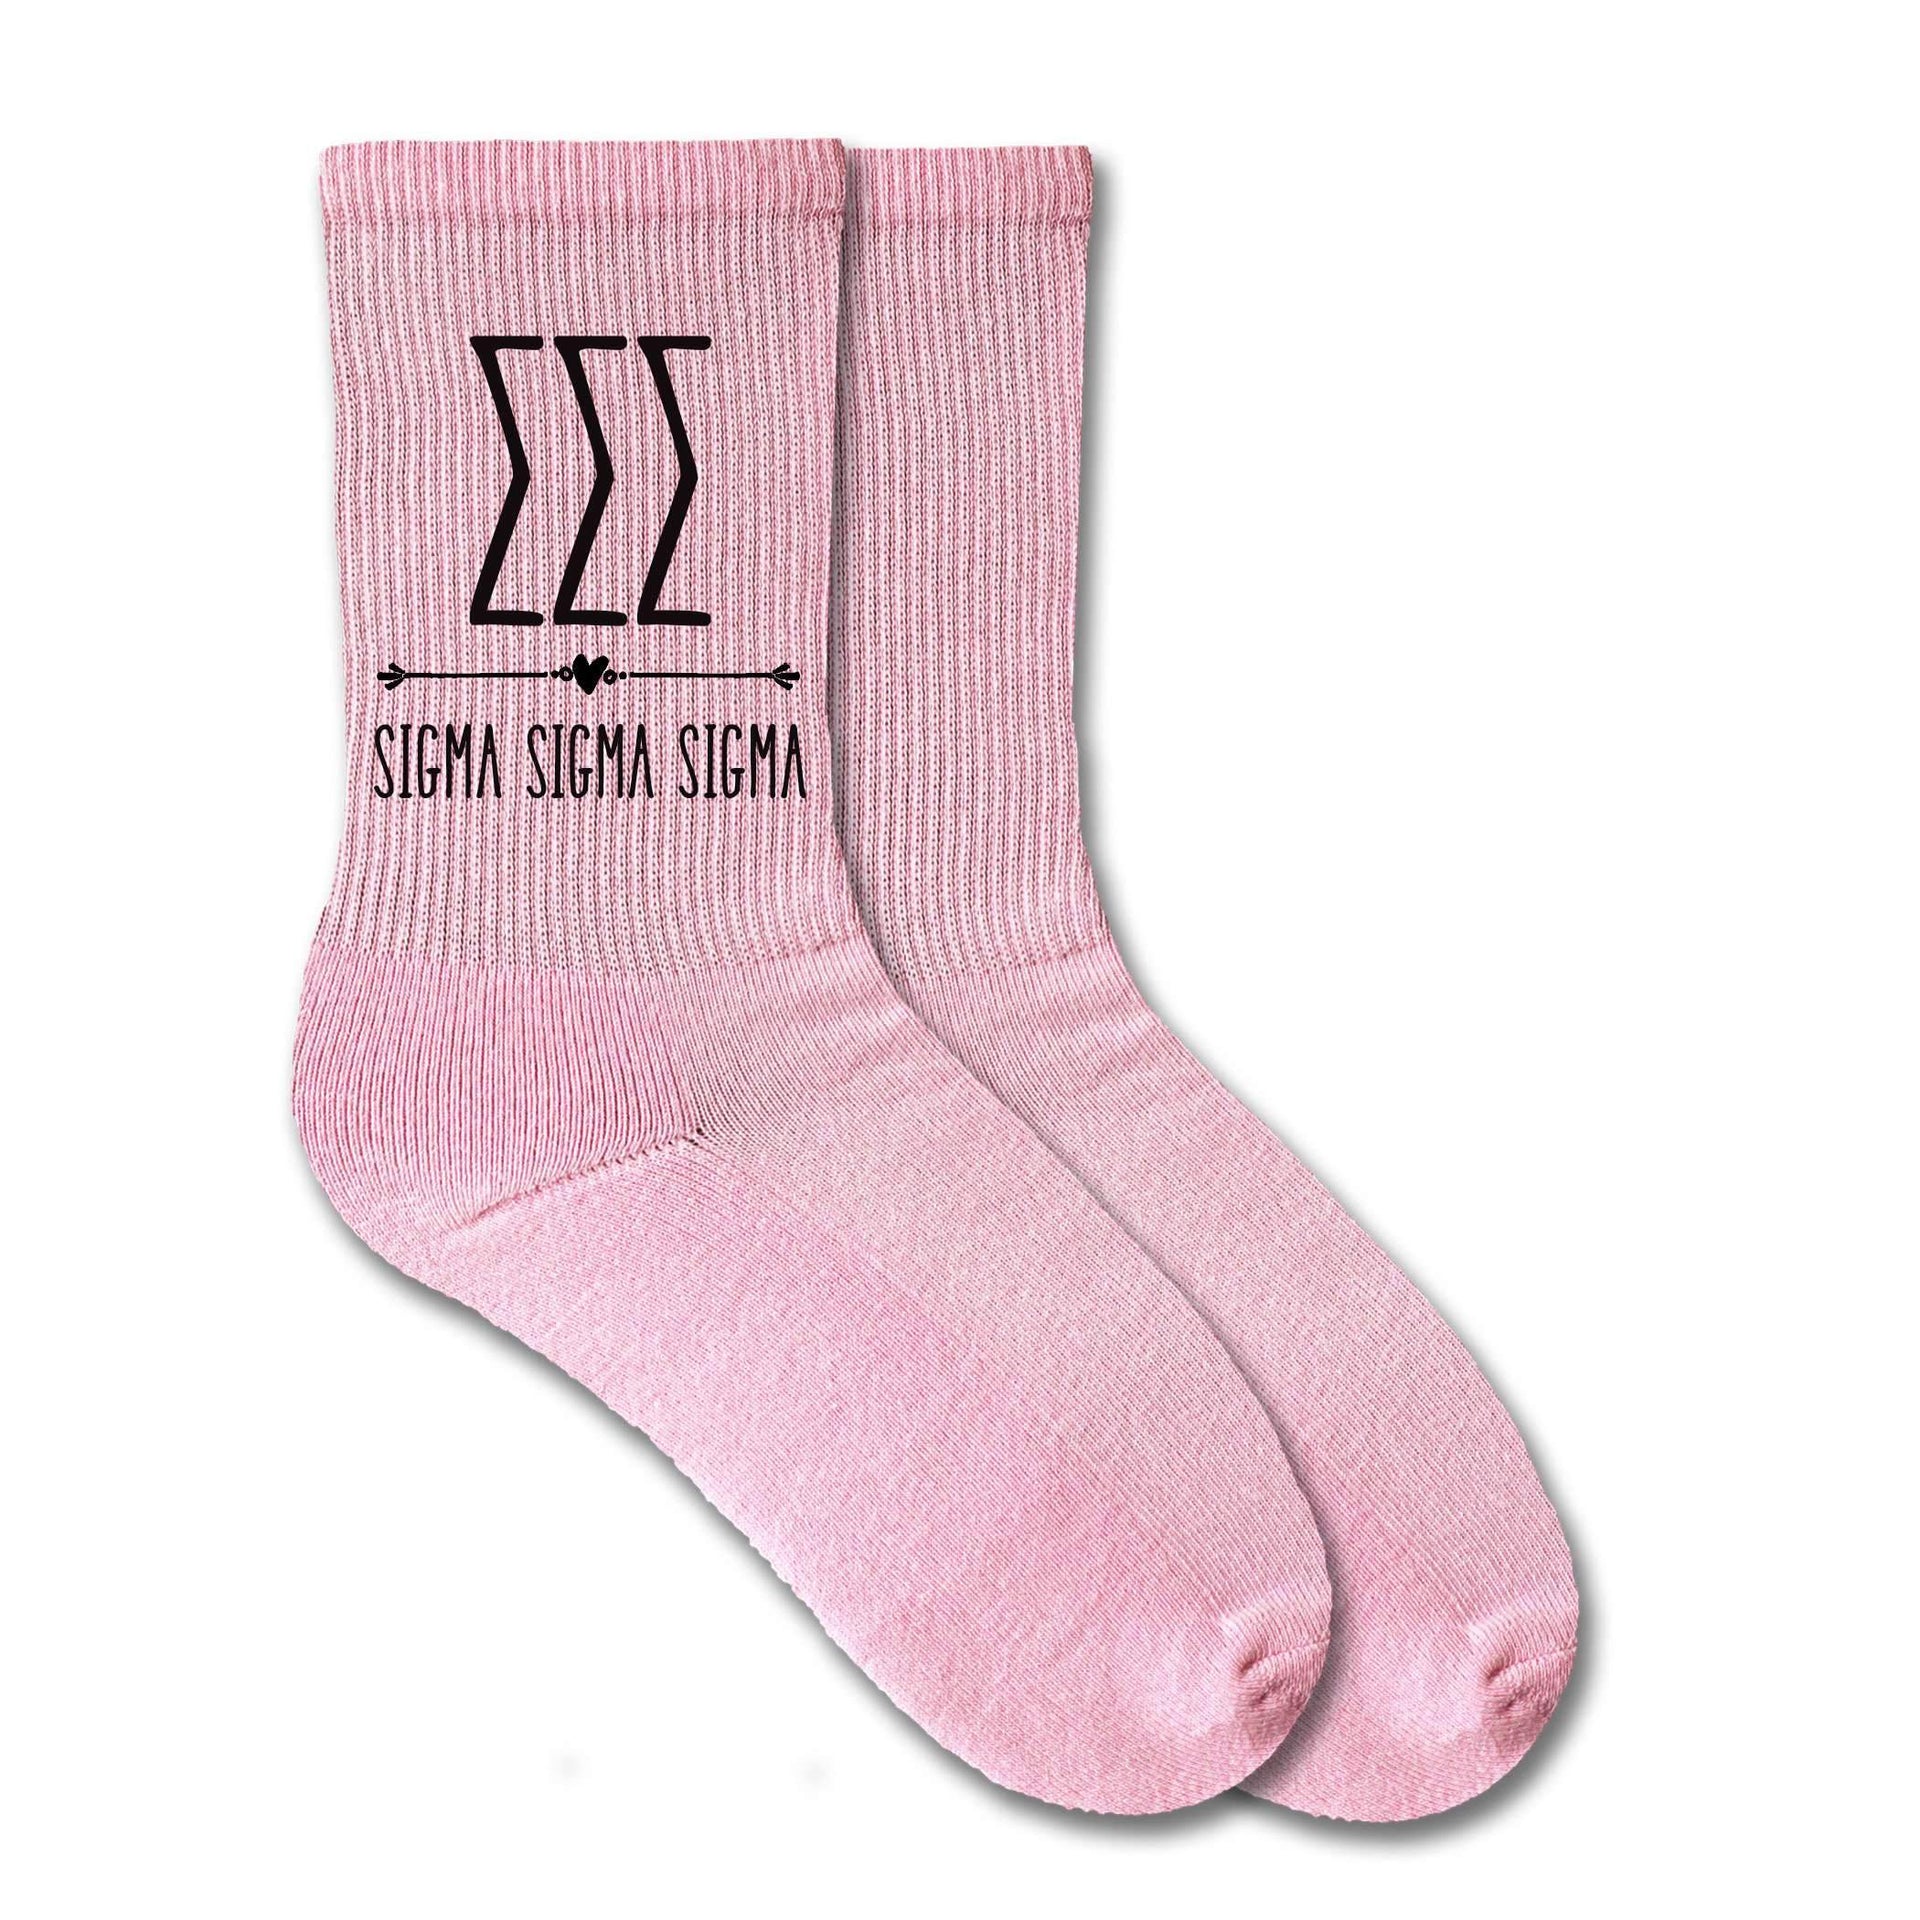 Sigma Sigma Sigma sorority letters custom printed on pink crew socks